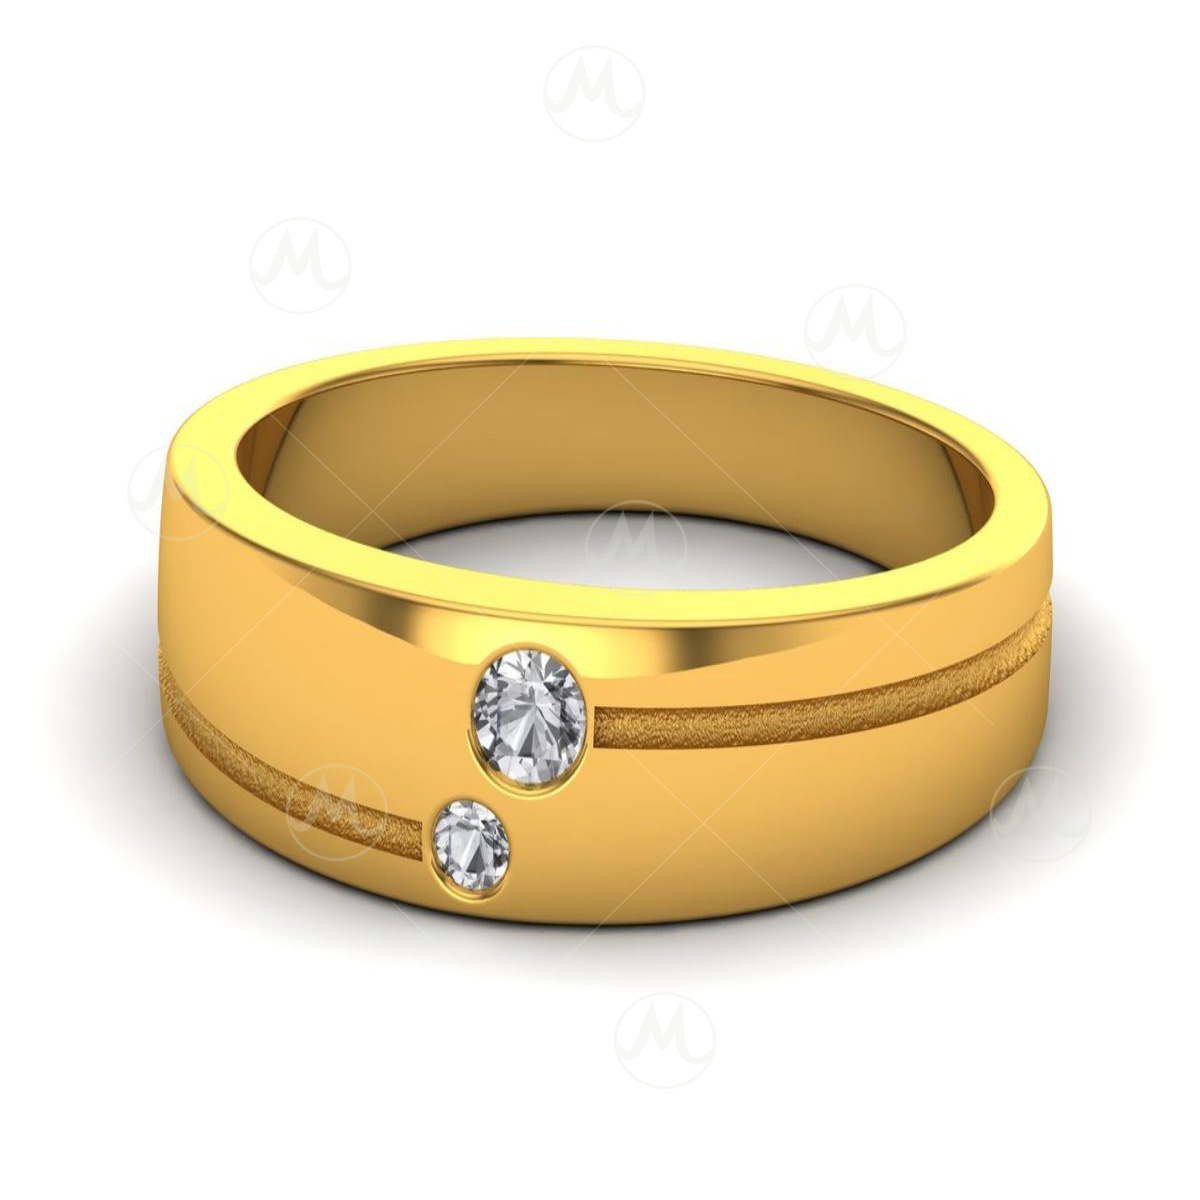 Hot Couple Rings Stainless Steel simple design silver Promise love wedding  rings | eBay